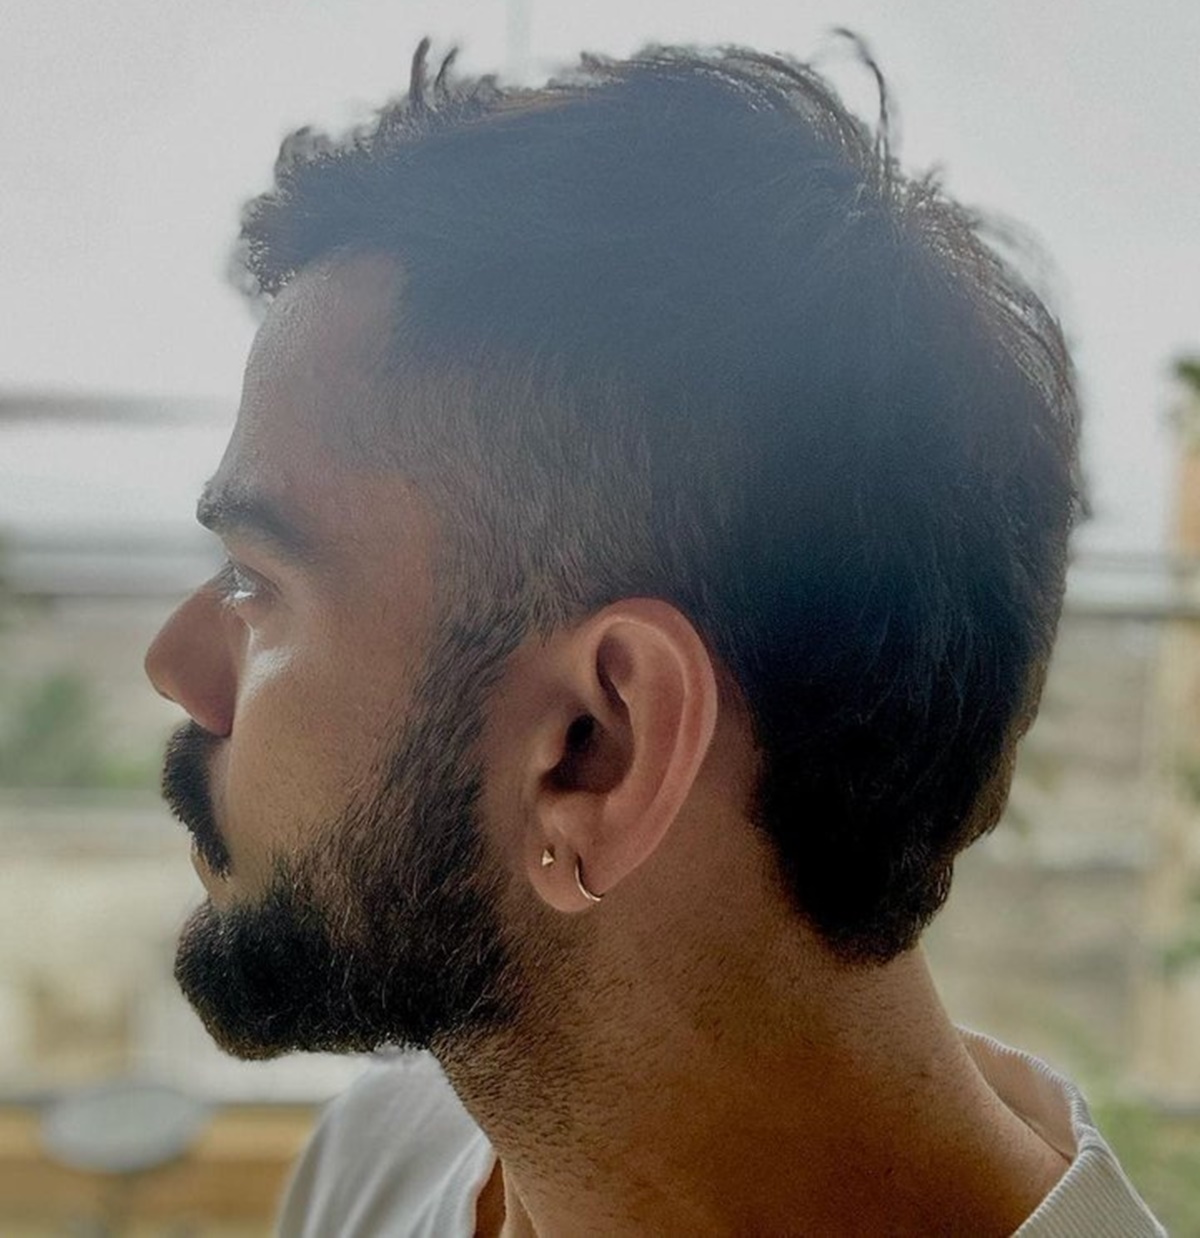 Here's the story behind Virat Kohli's new hairdo - Hindustan Times